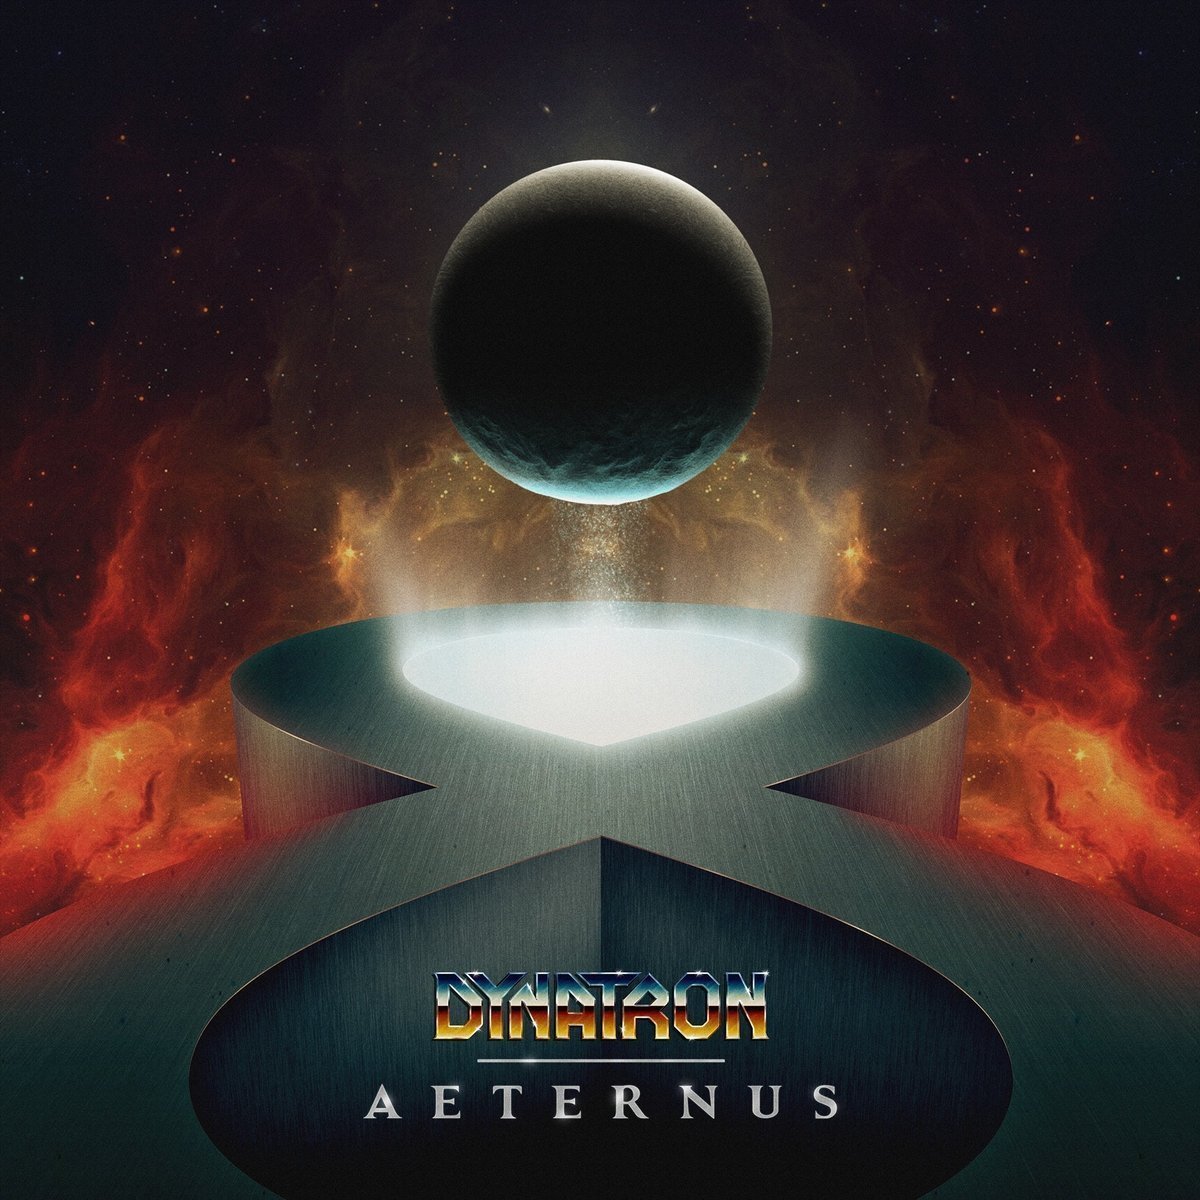 Vinyl Record Dynatron - Aeternus (2 LP)